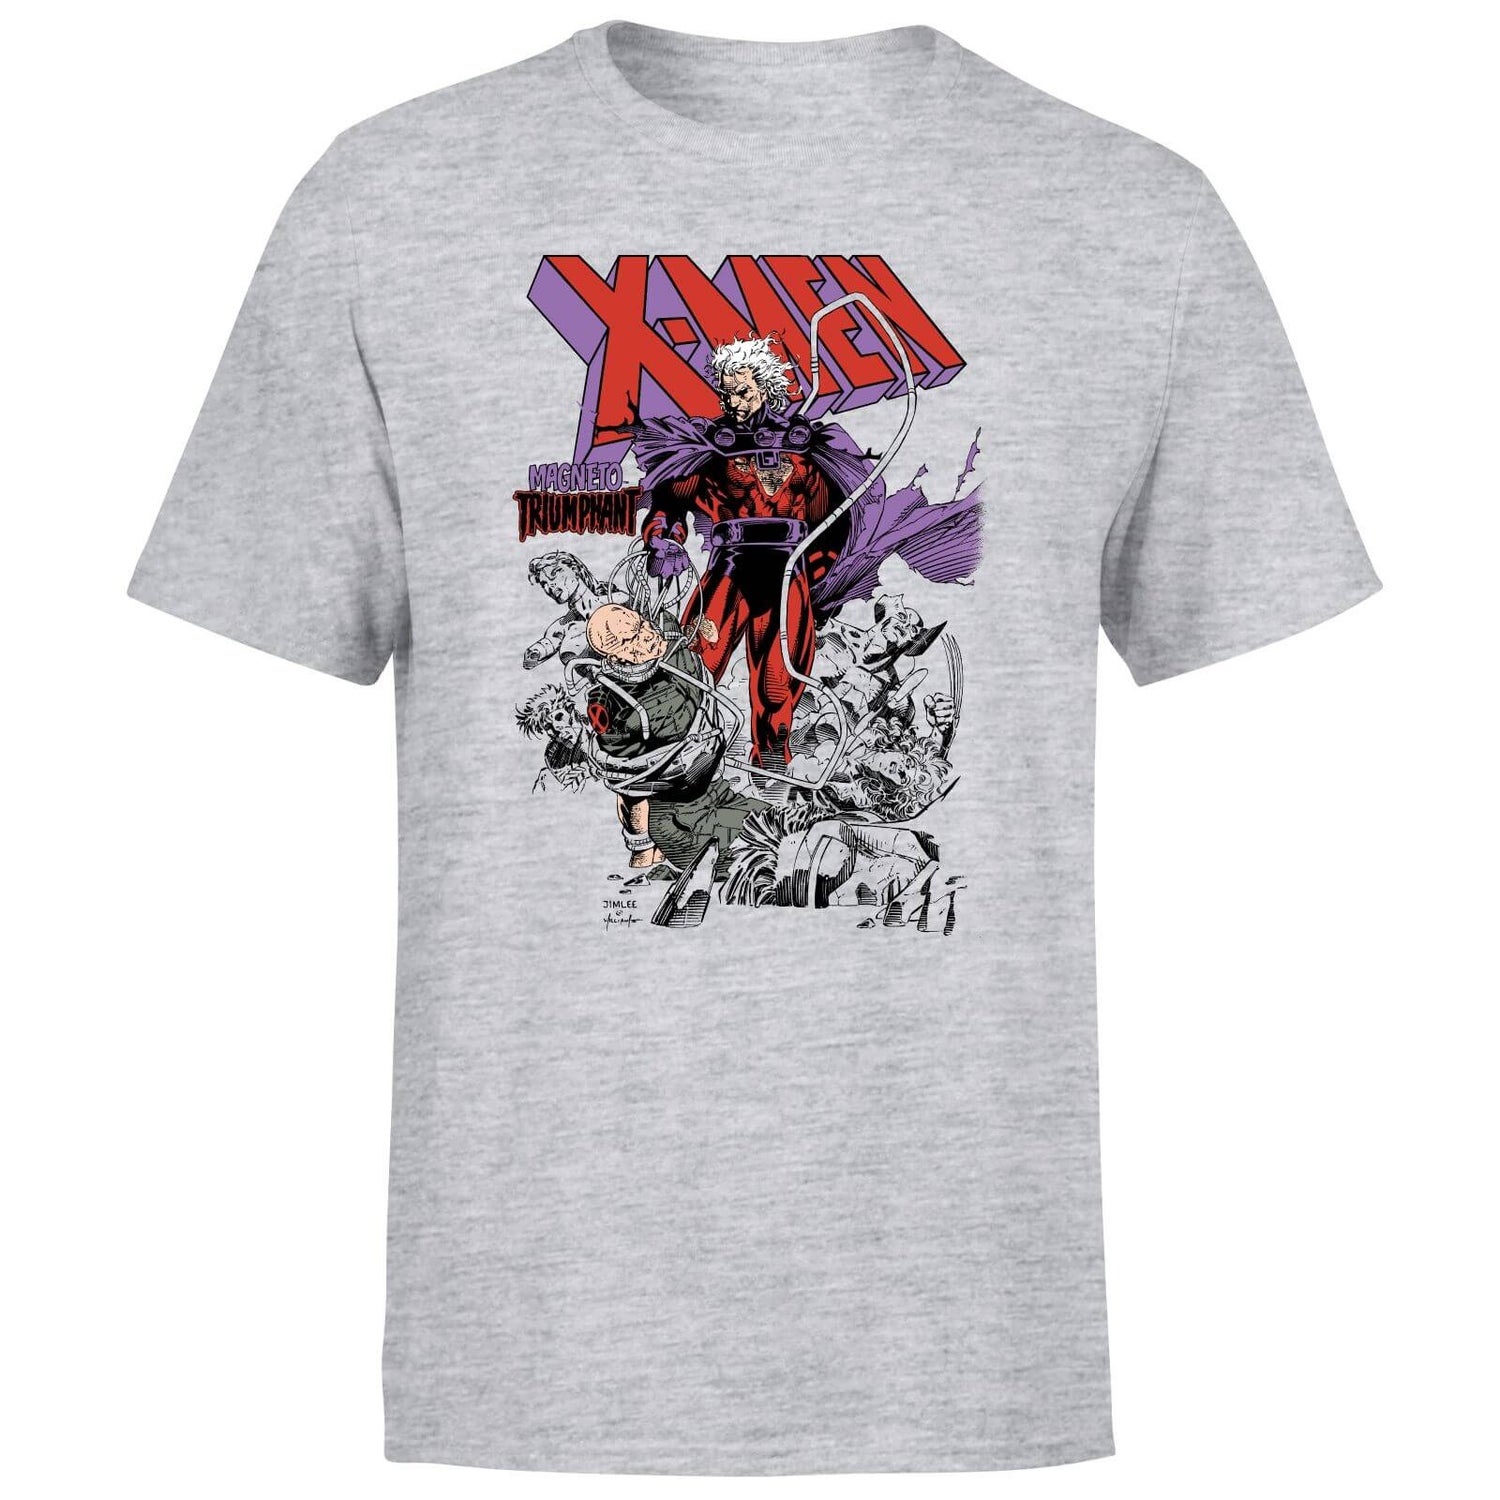 X-Men Magneto Triumphant T-Shirt - Grey